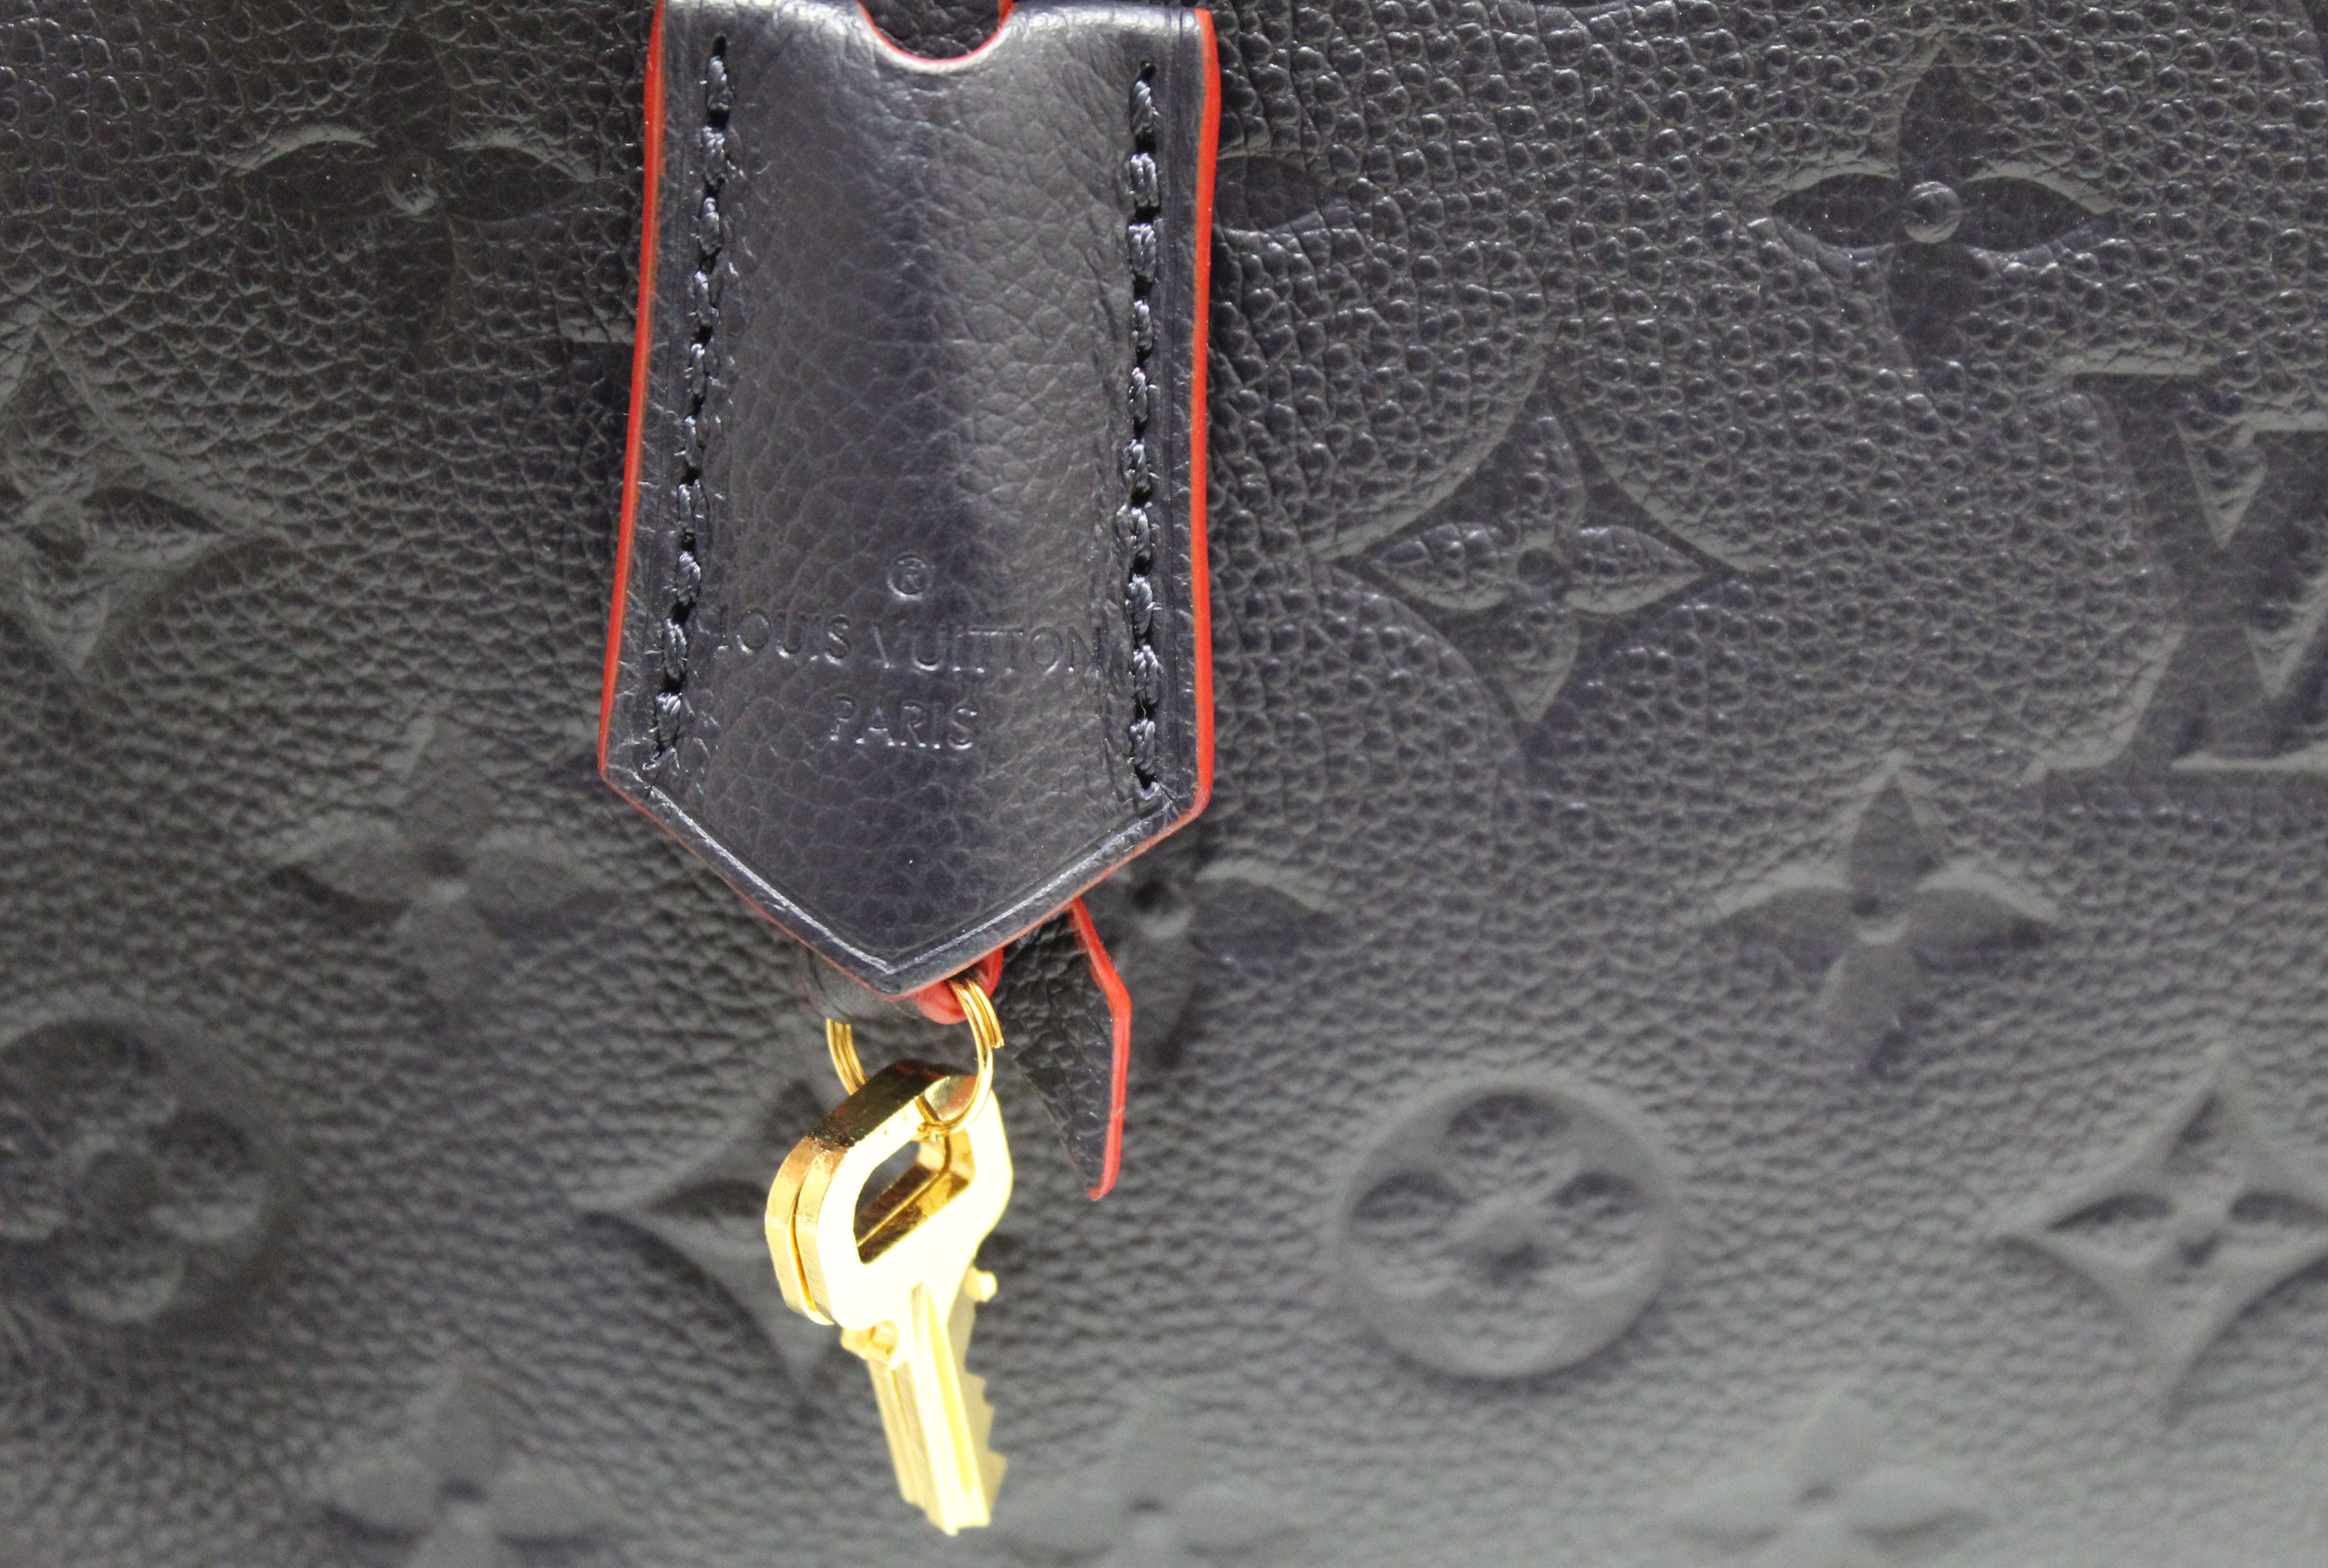 Louis Vuitton Montaigne Monogram Empreinte BB Blossom in Leather